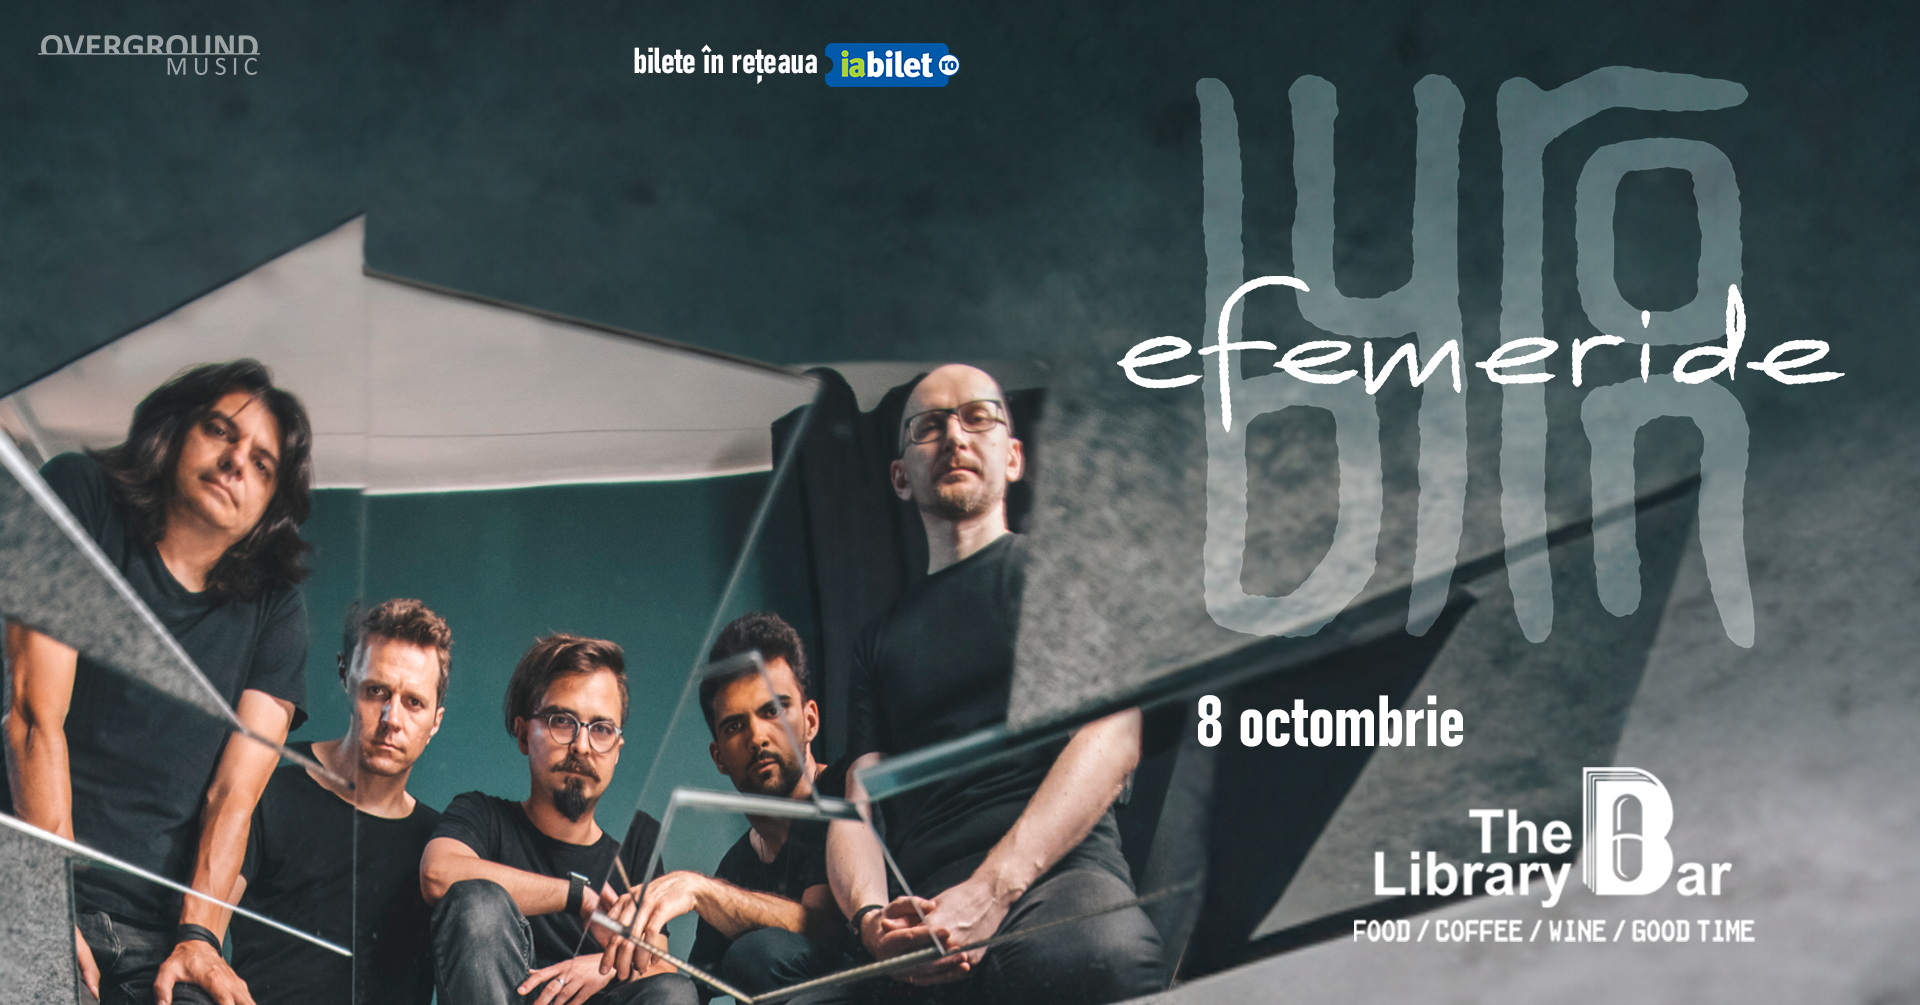 byron lansare album ‚Efemeride’ @ The Library Bar